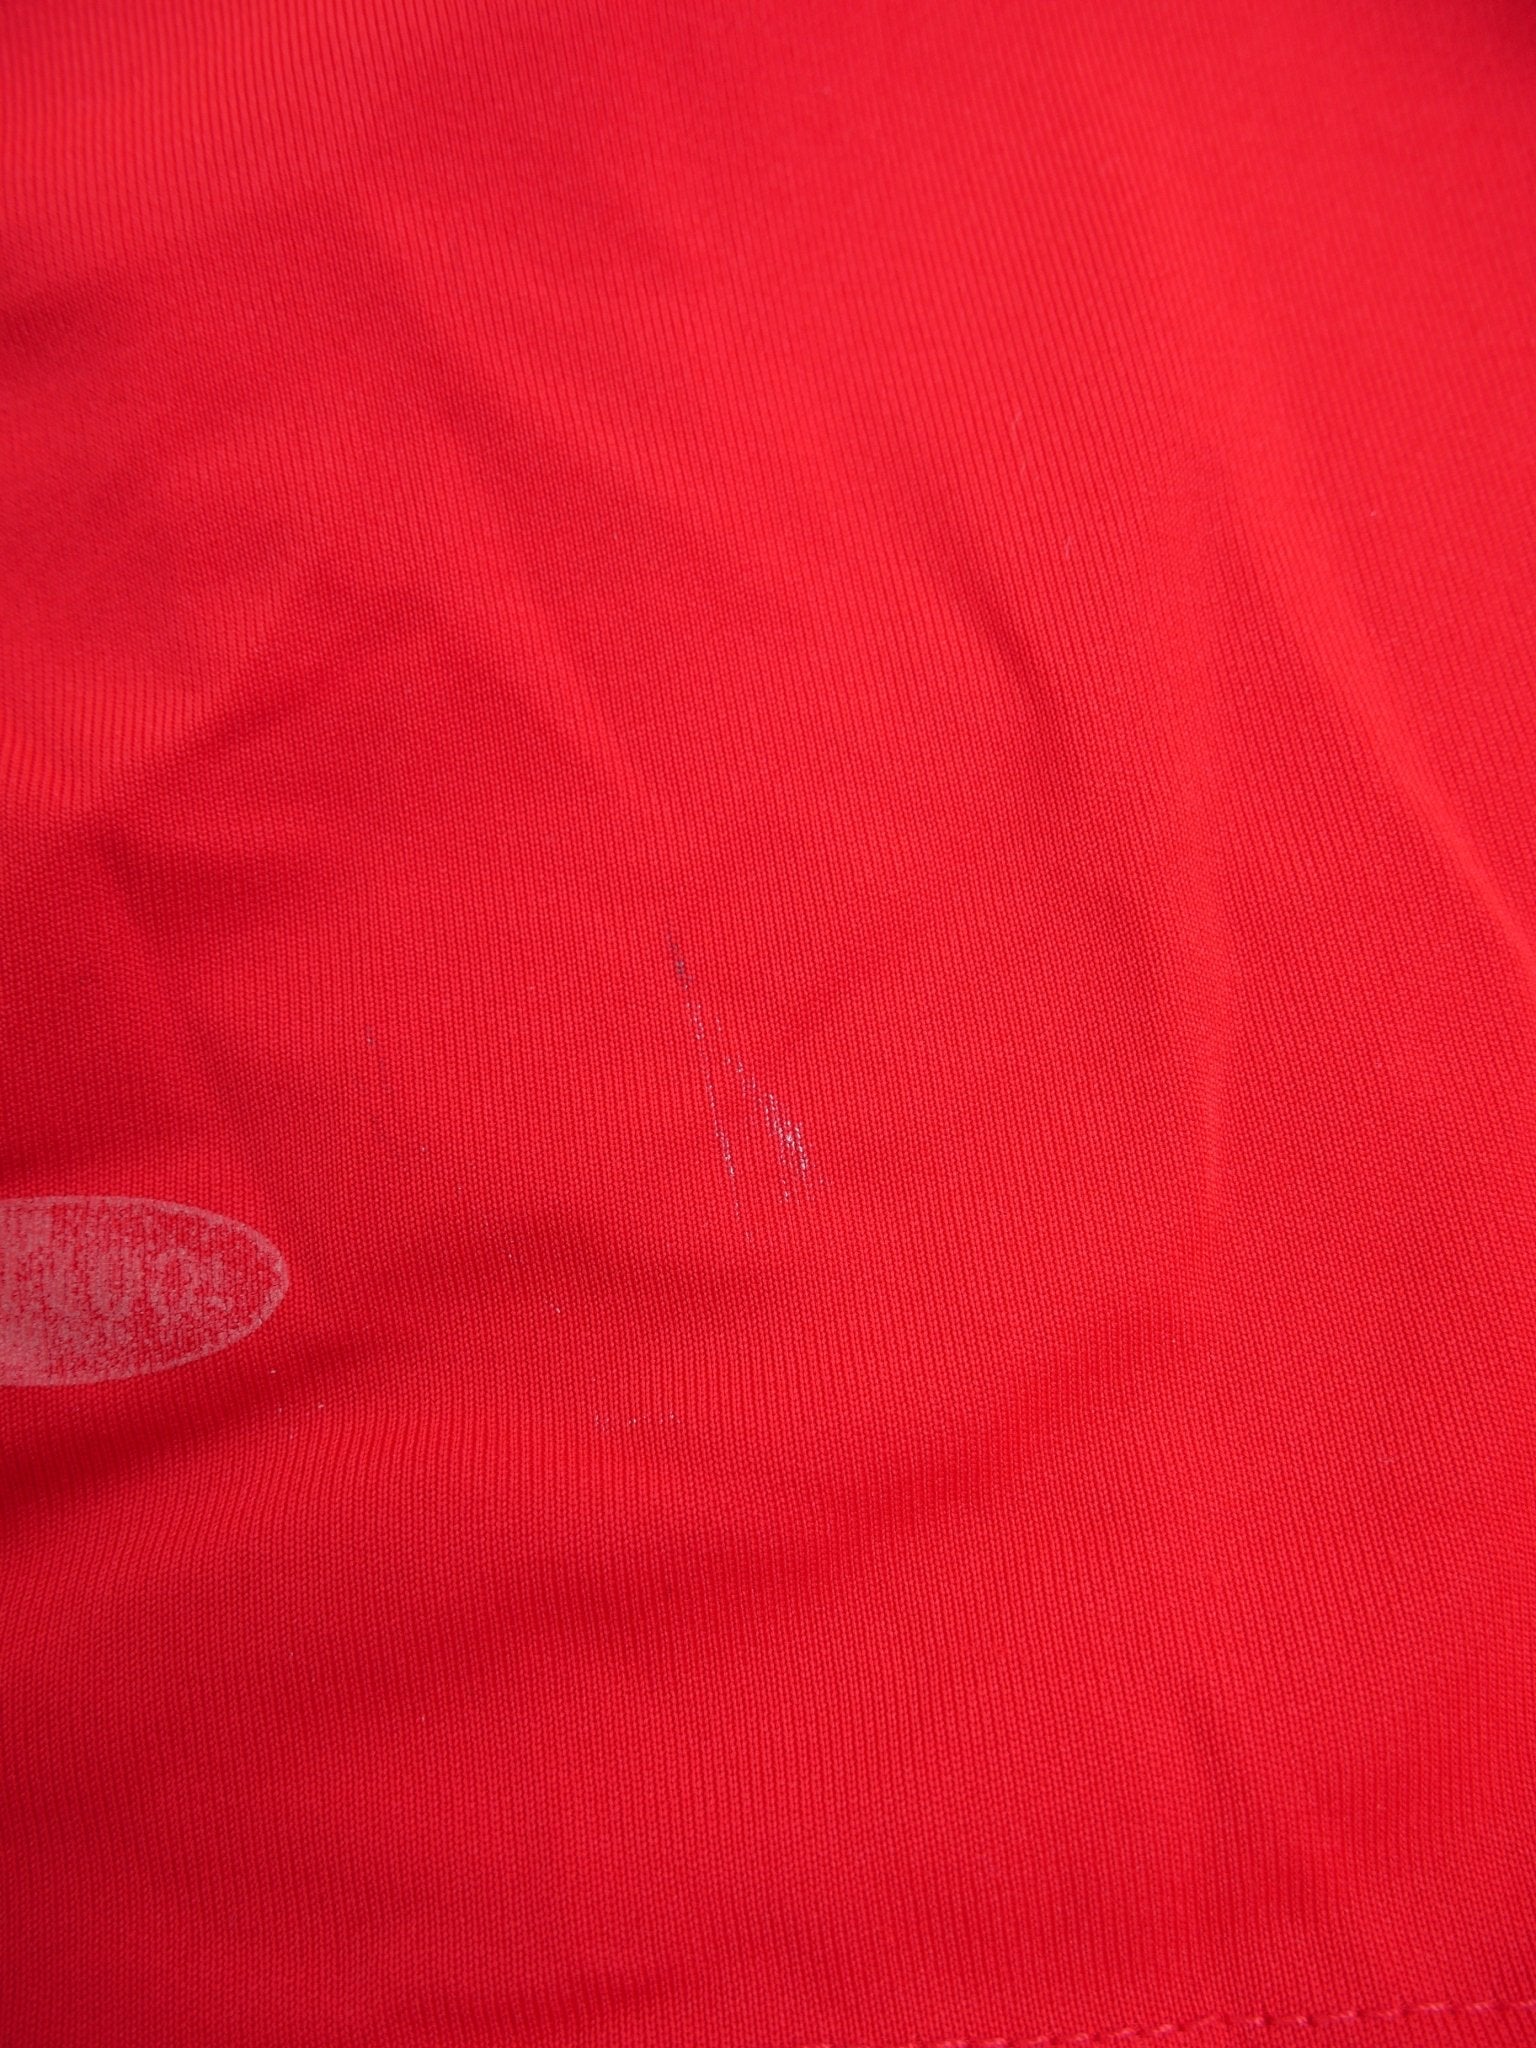 adidas E Pluribus Unum embroidered Logo red Jersey Shirt - Peeces